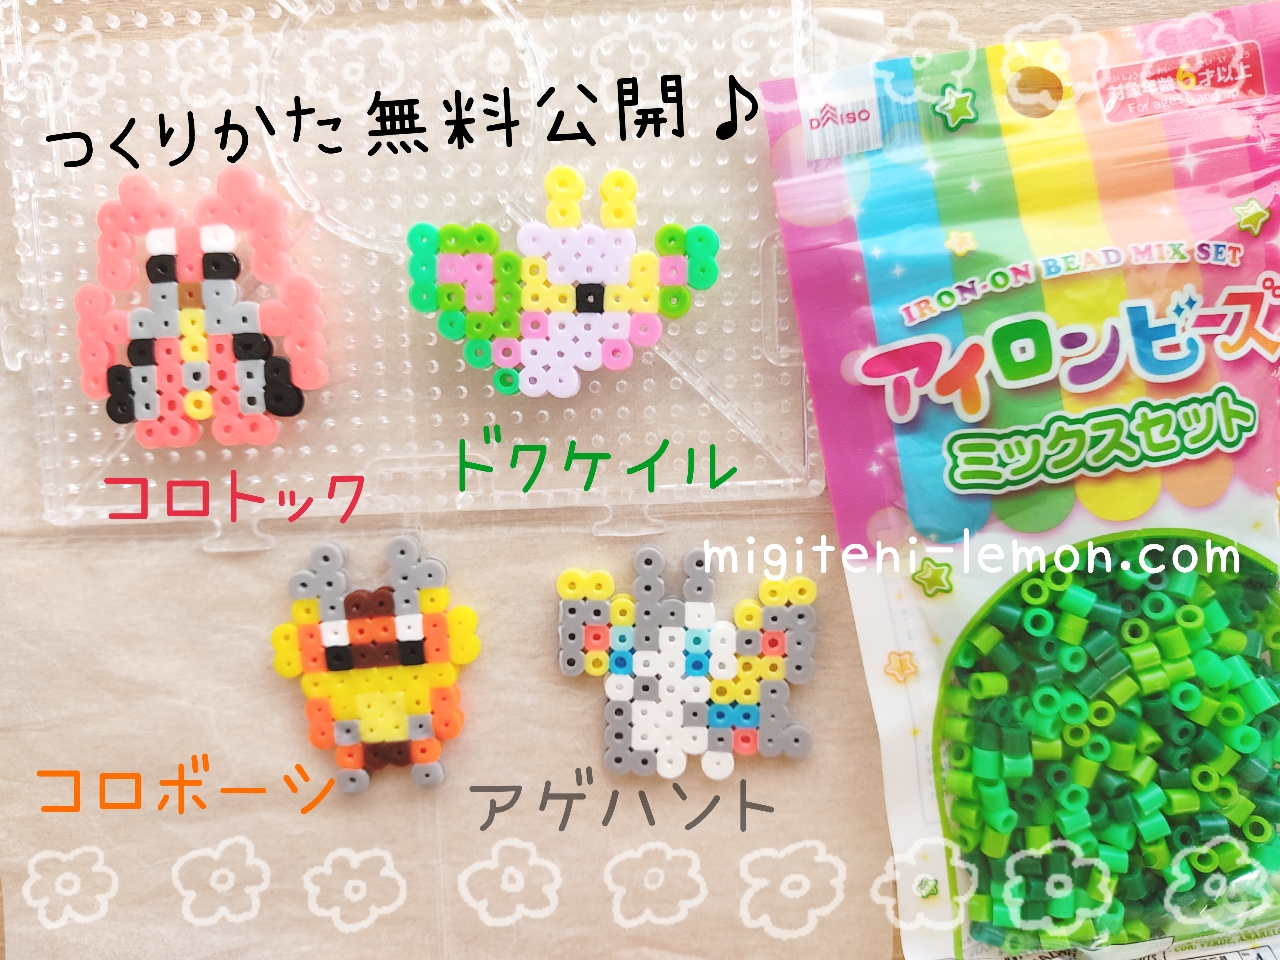 korotokku-kricketune-dokukeiru-dustox-pokemon-beads-free-zuan